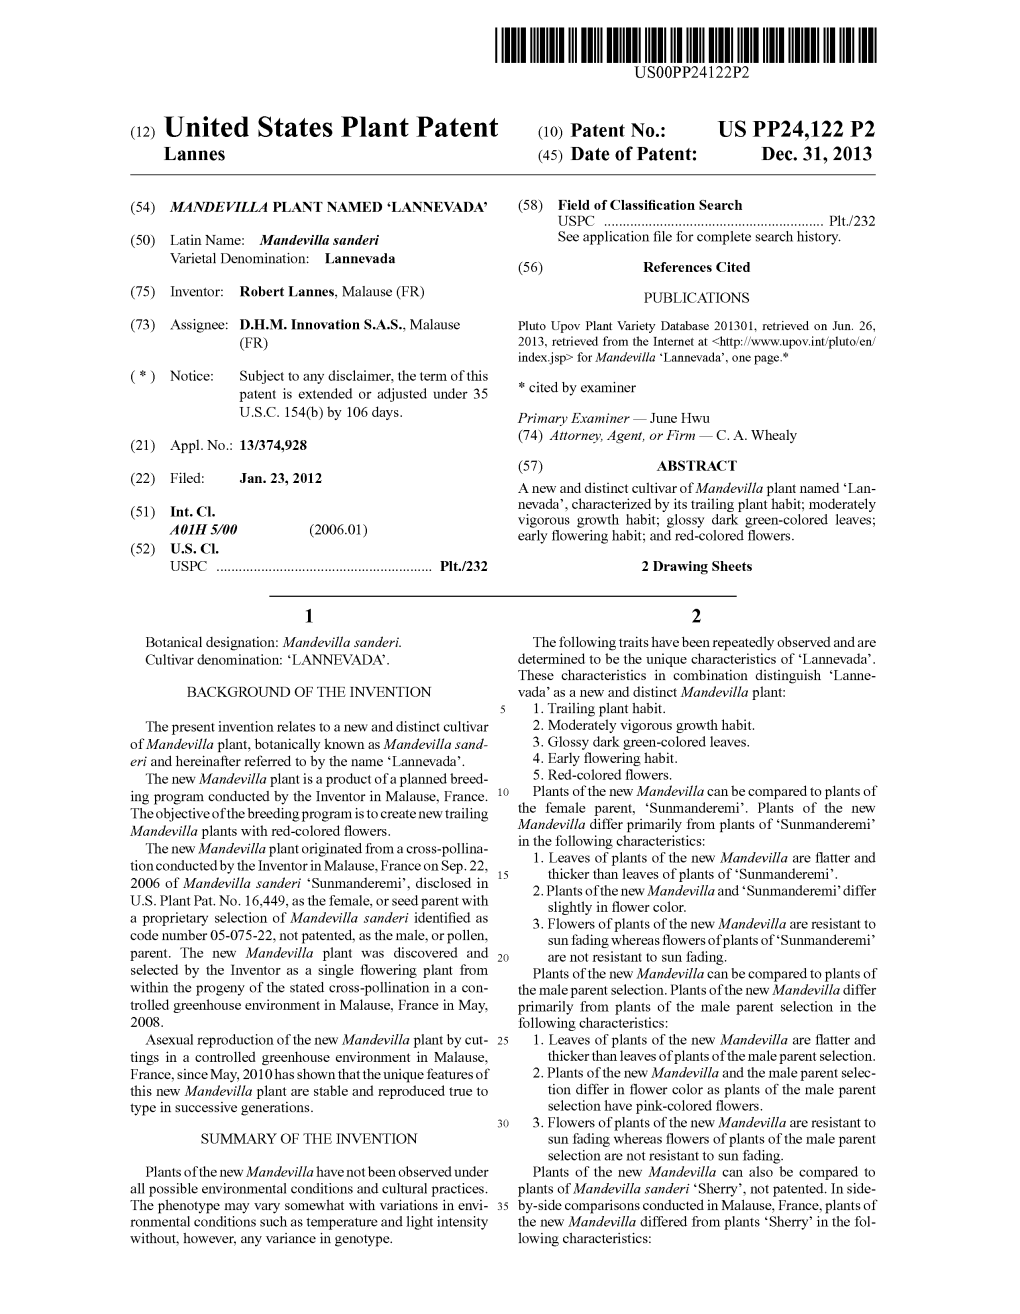 (12) United States Plant Patent (10) Patent No.: US PP24,122 P2 Lannes (45) Date of Patent: Dec